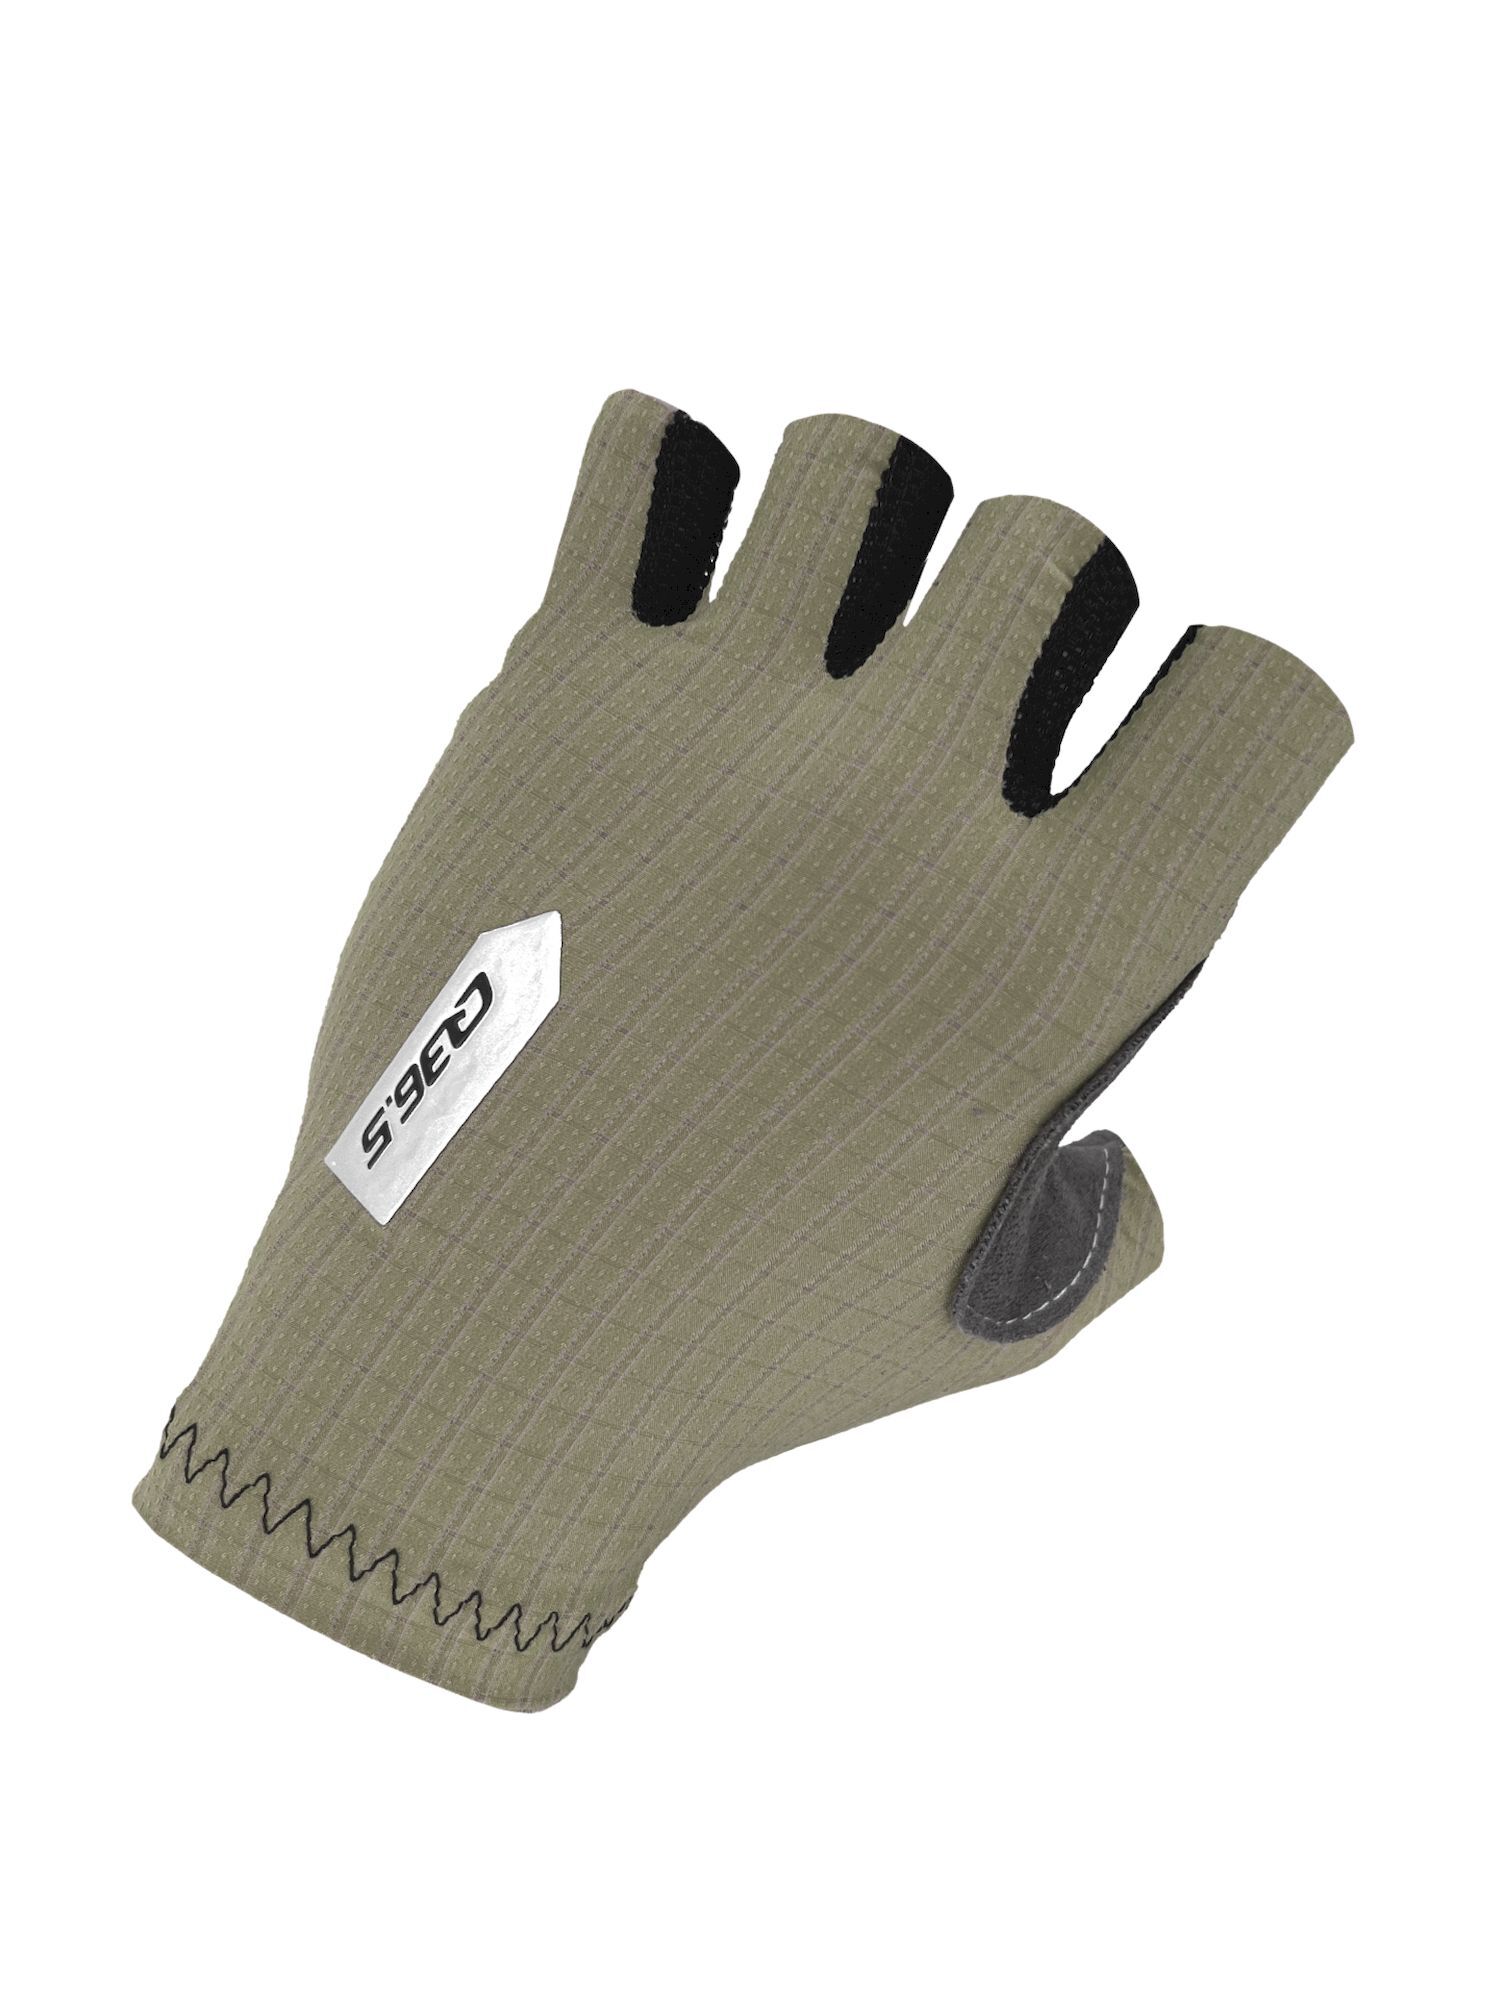 Q36.5 Pinstripe Summer Gloves - Guanti corti ciclismo | Hardloop